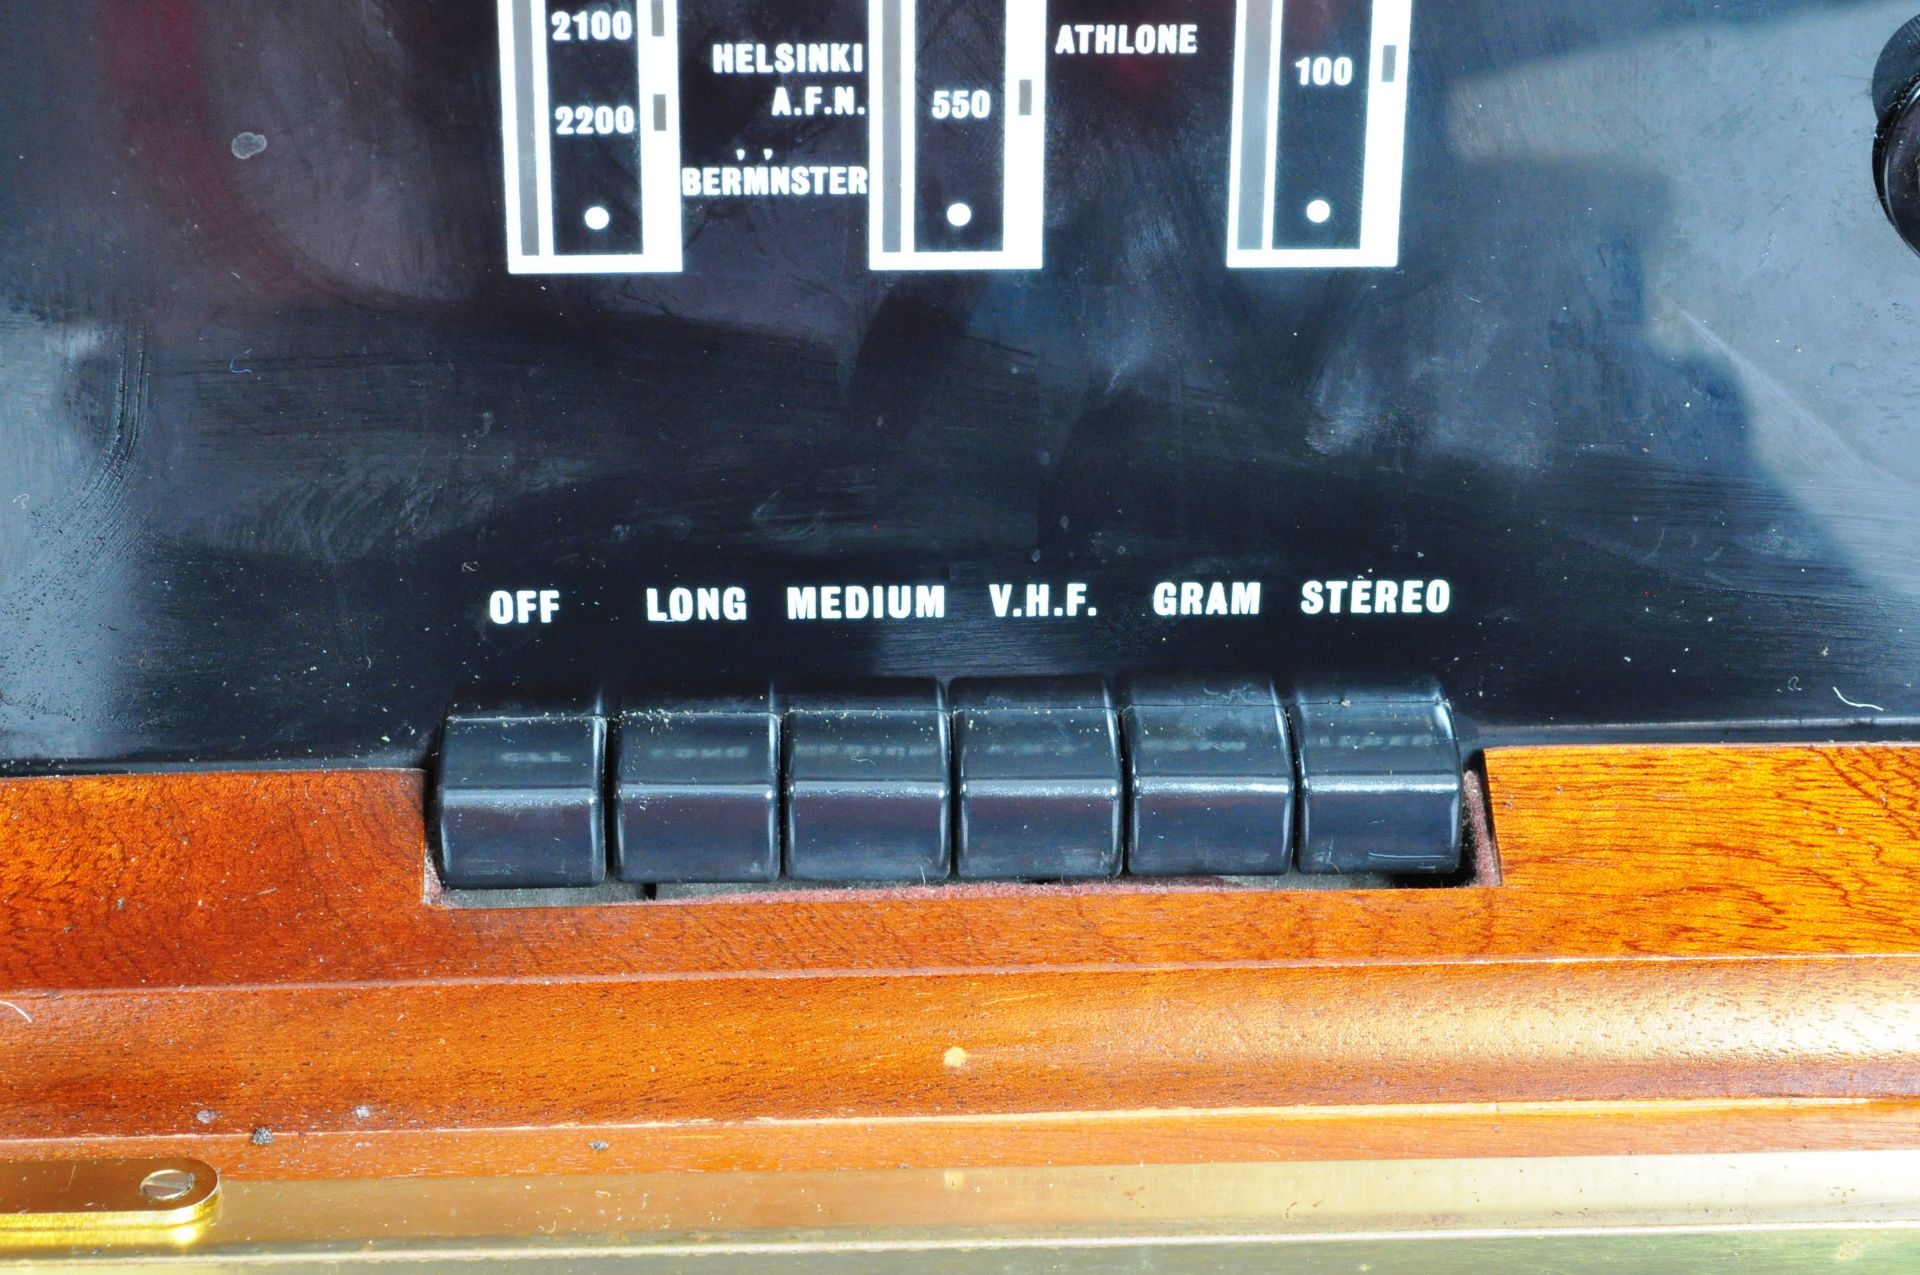 DECCA MODEL SRG 700 WALNUT CASED 1960'S RADIOGRAM - Bild 9 aus 12